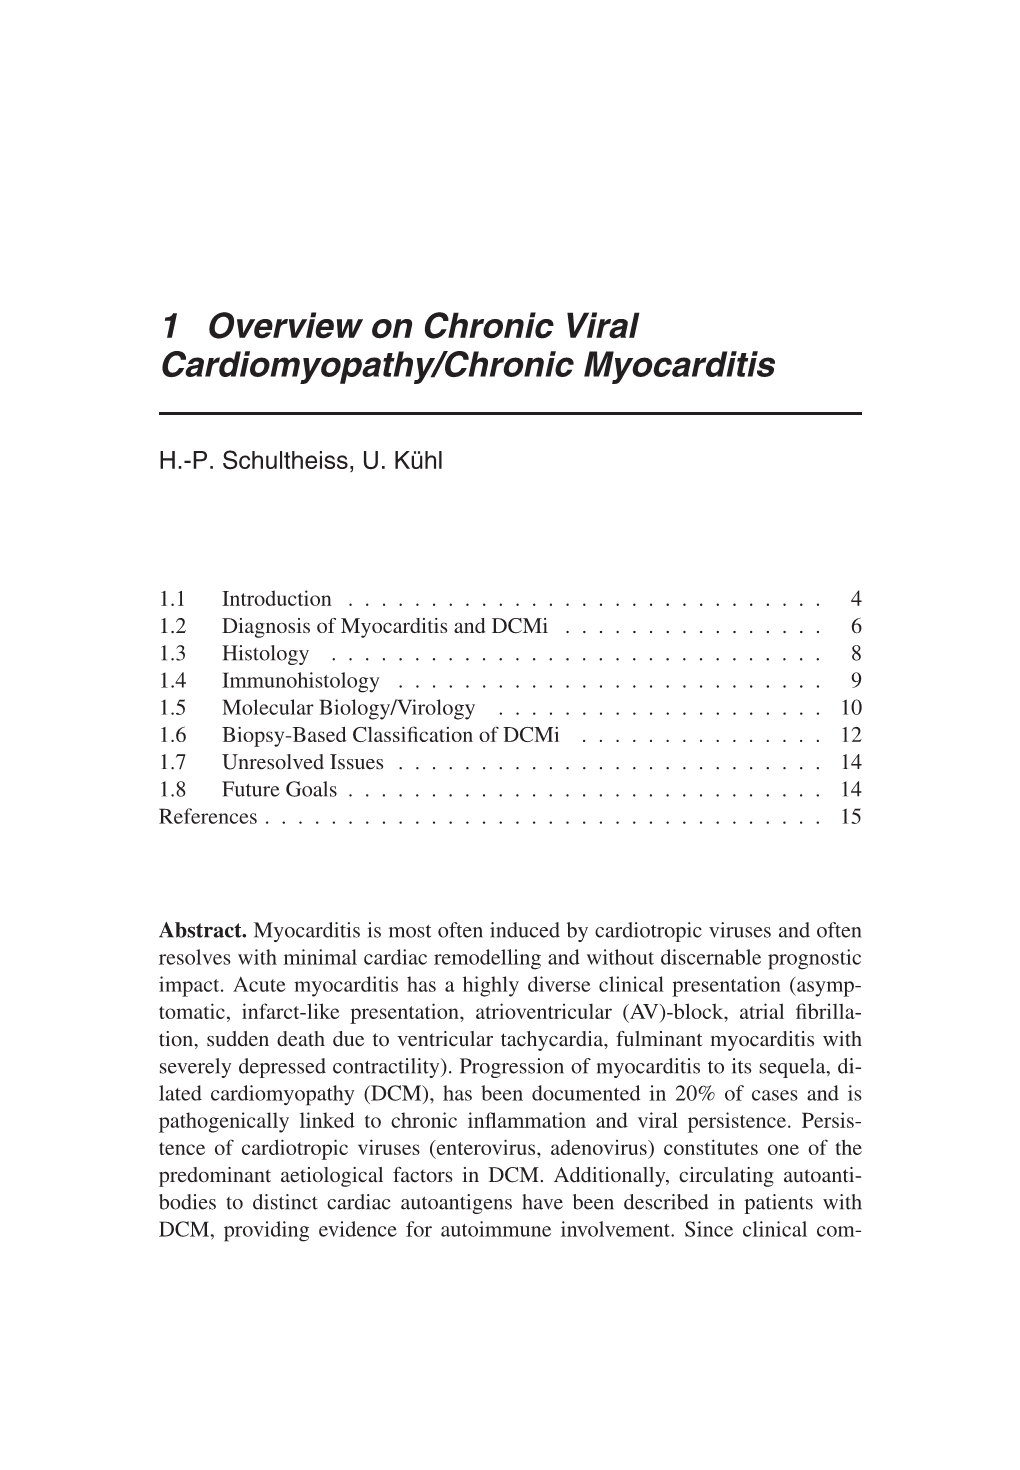 1 Overview on Chronic Viral Cardiomyopathy/Chronic Myocarditis